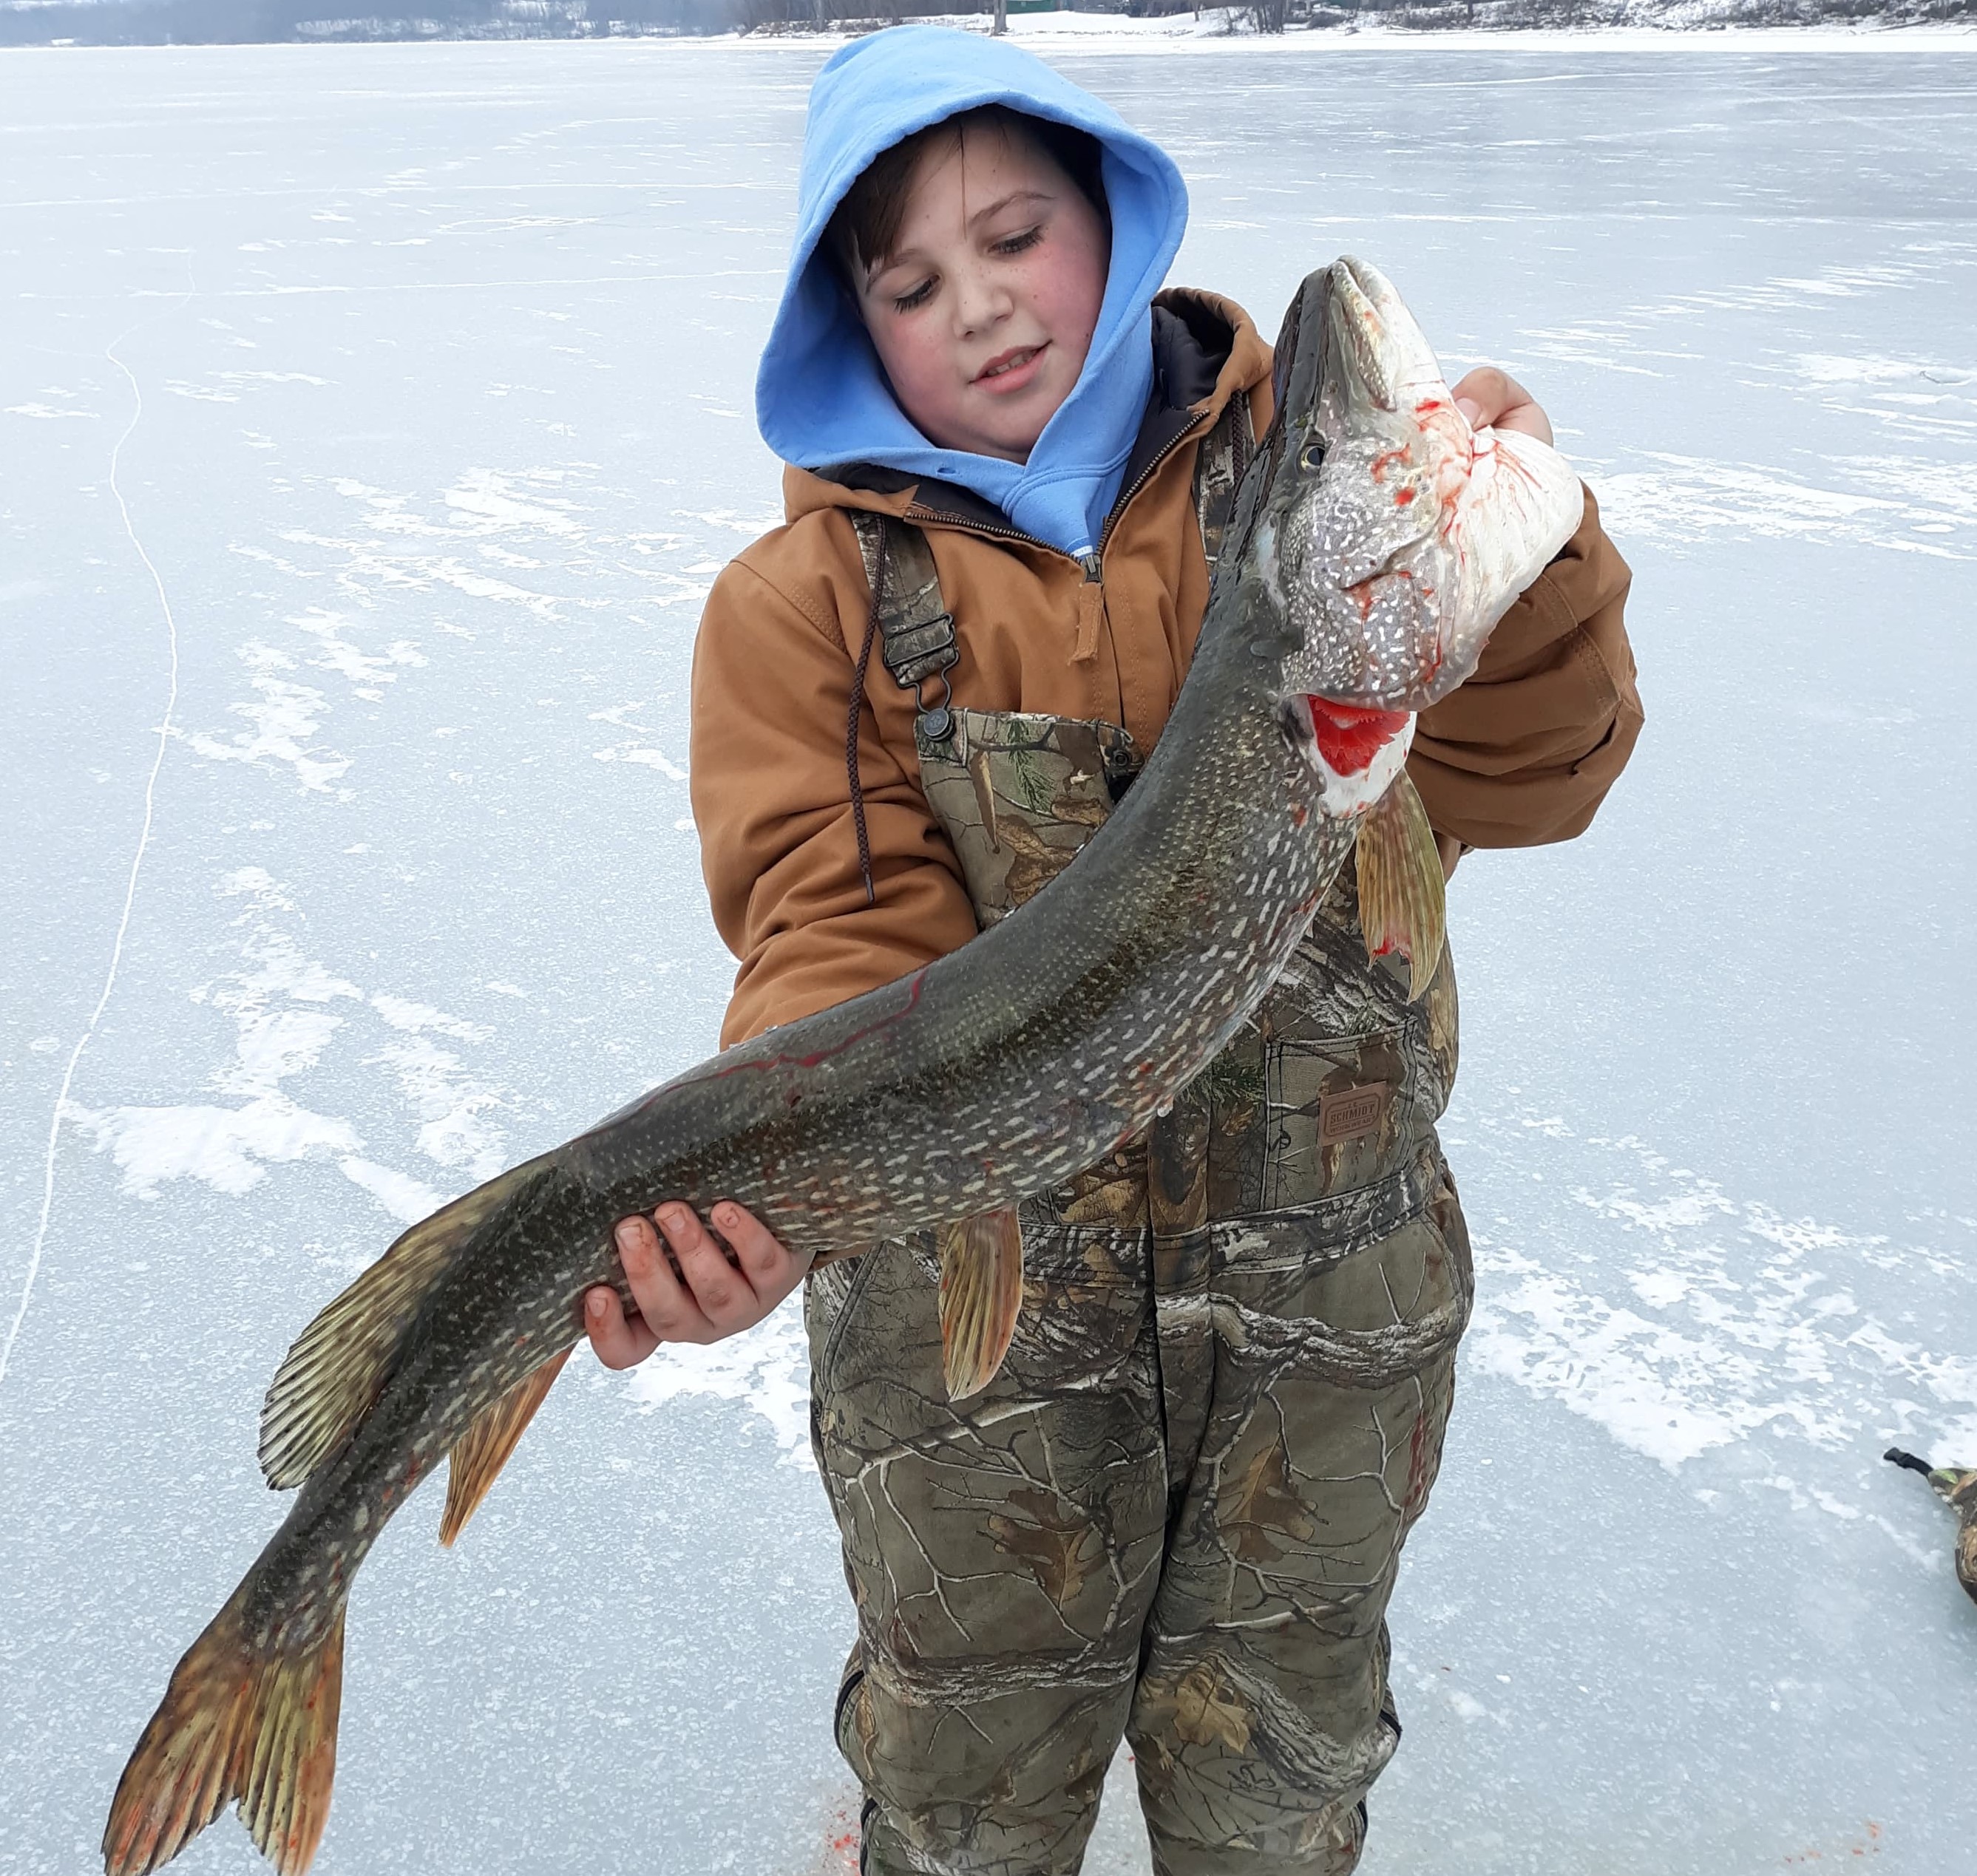 Upstate New York ice fishing: Anglers share photos of their eye